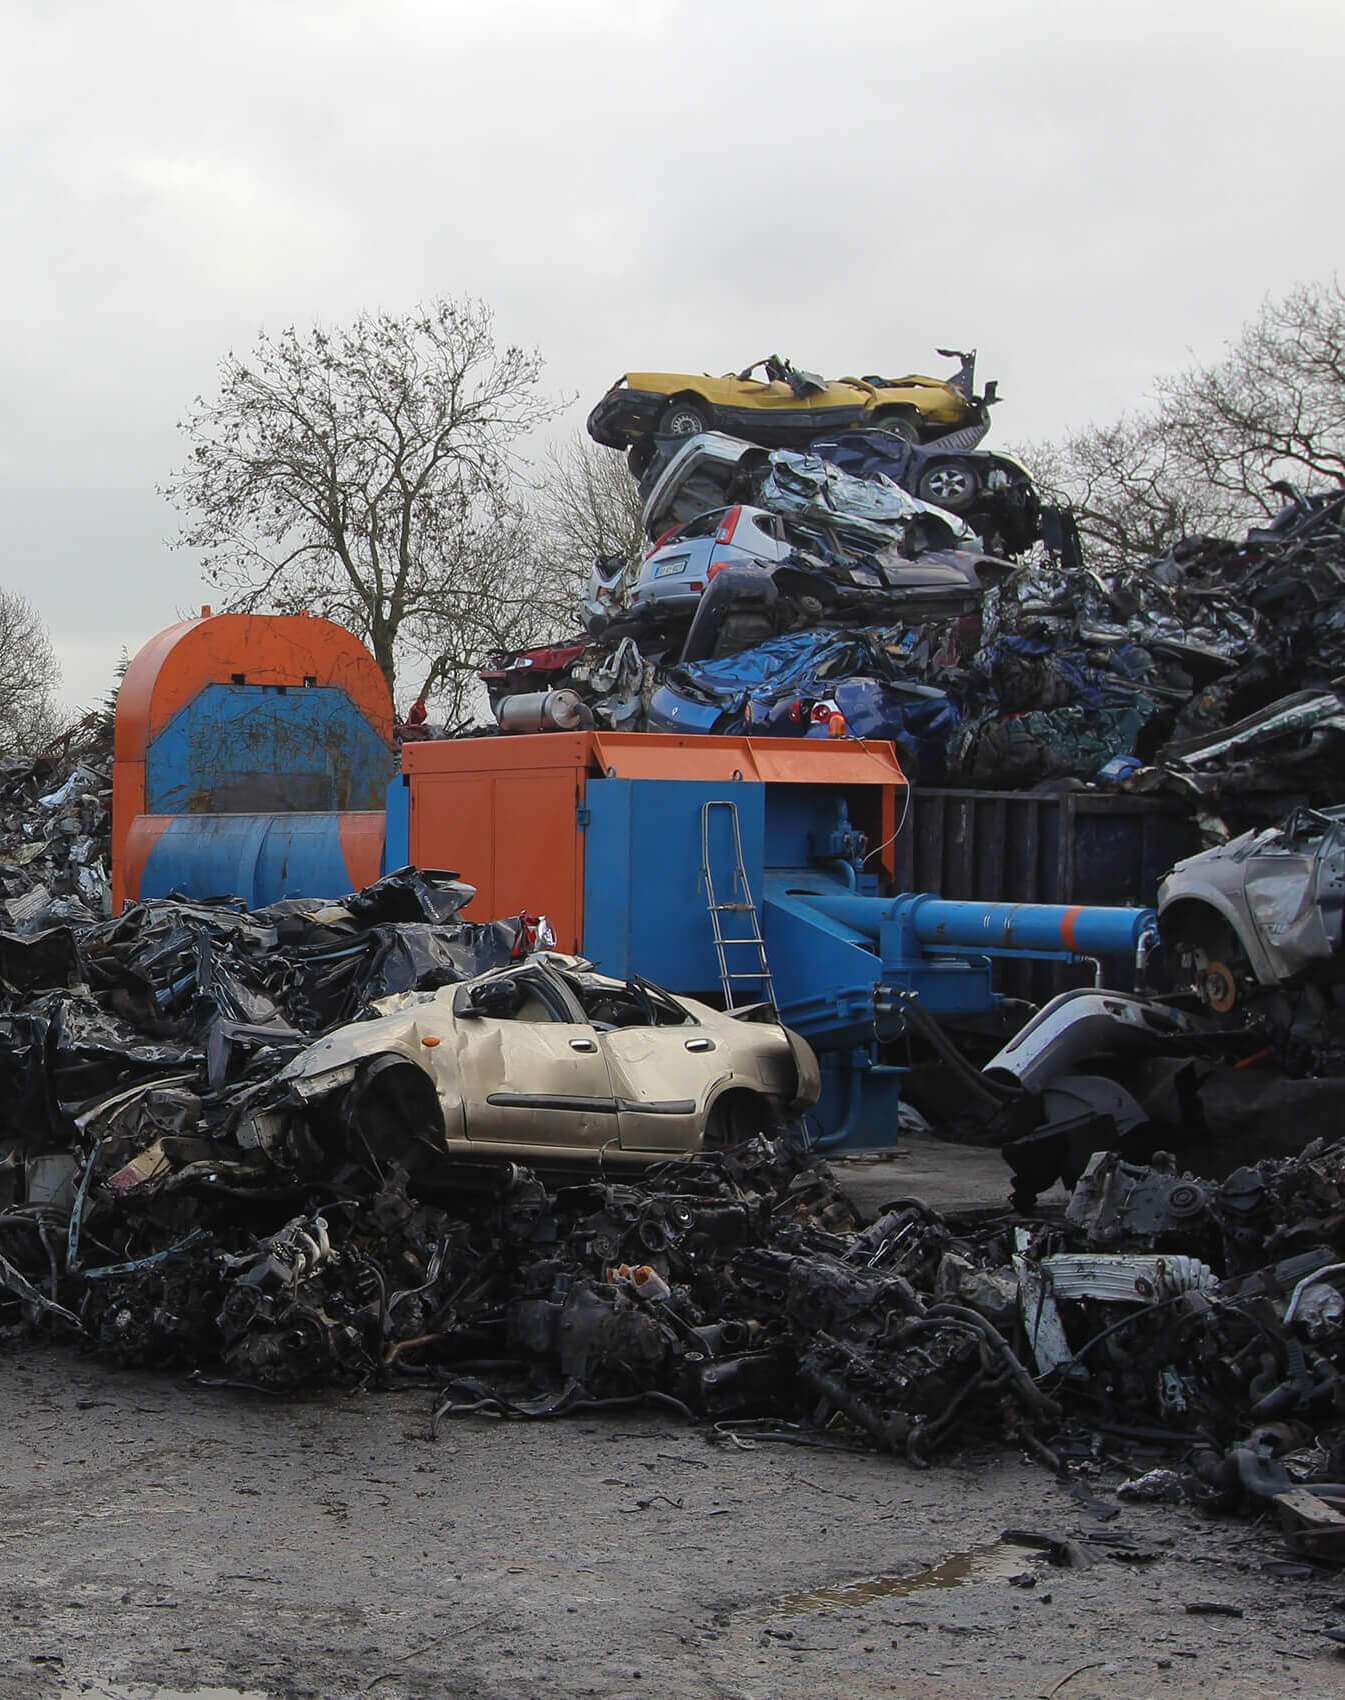 Molly Metal Recycling scrap yard